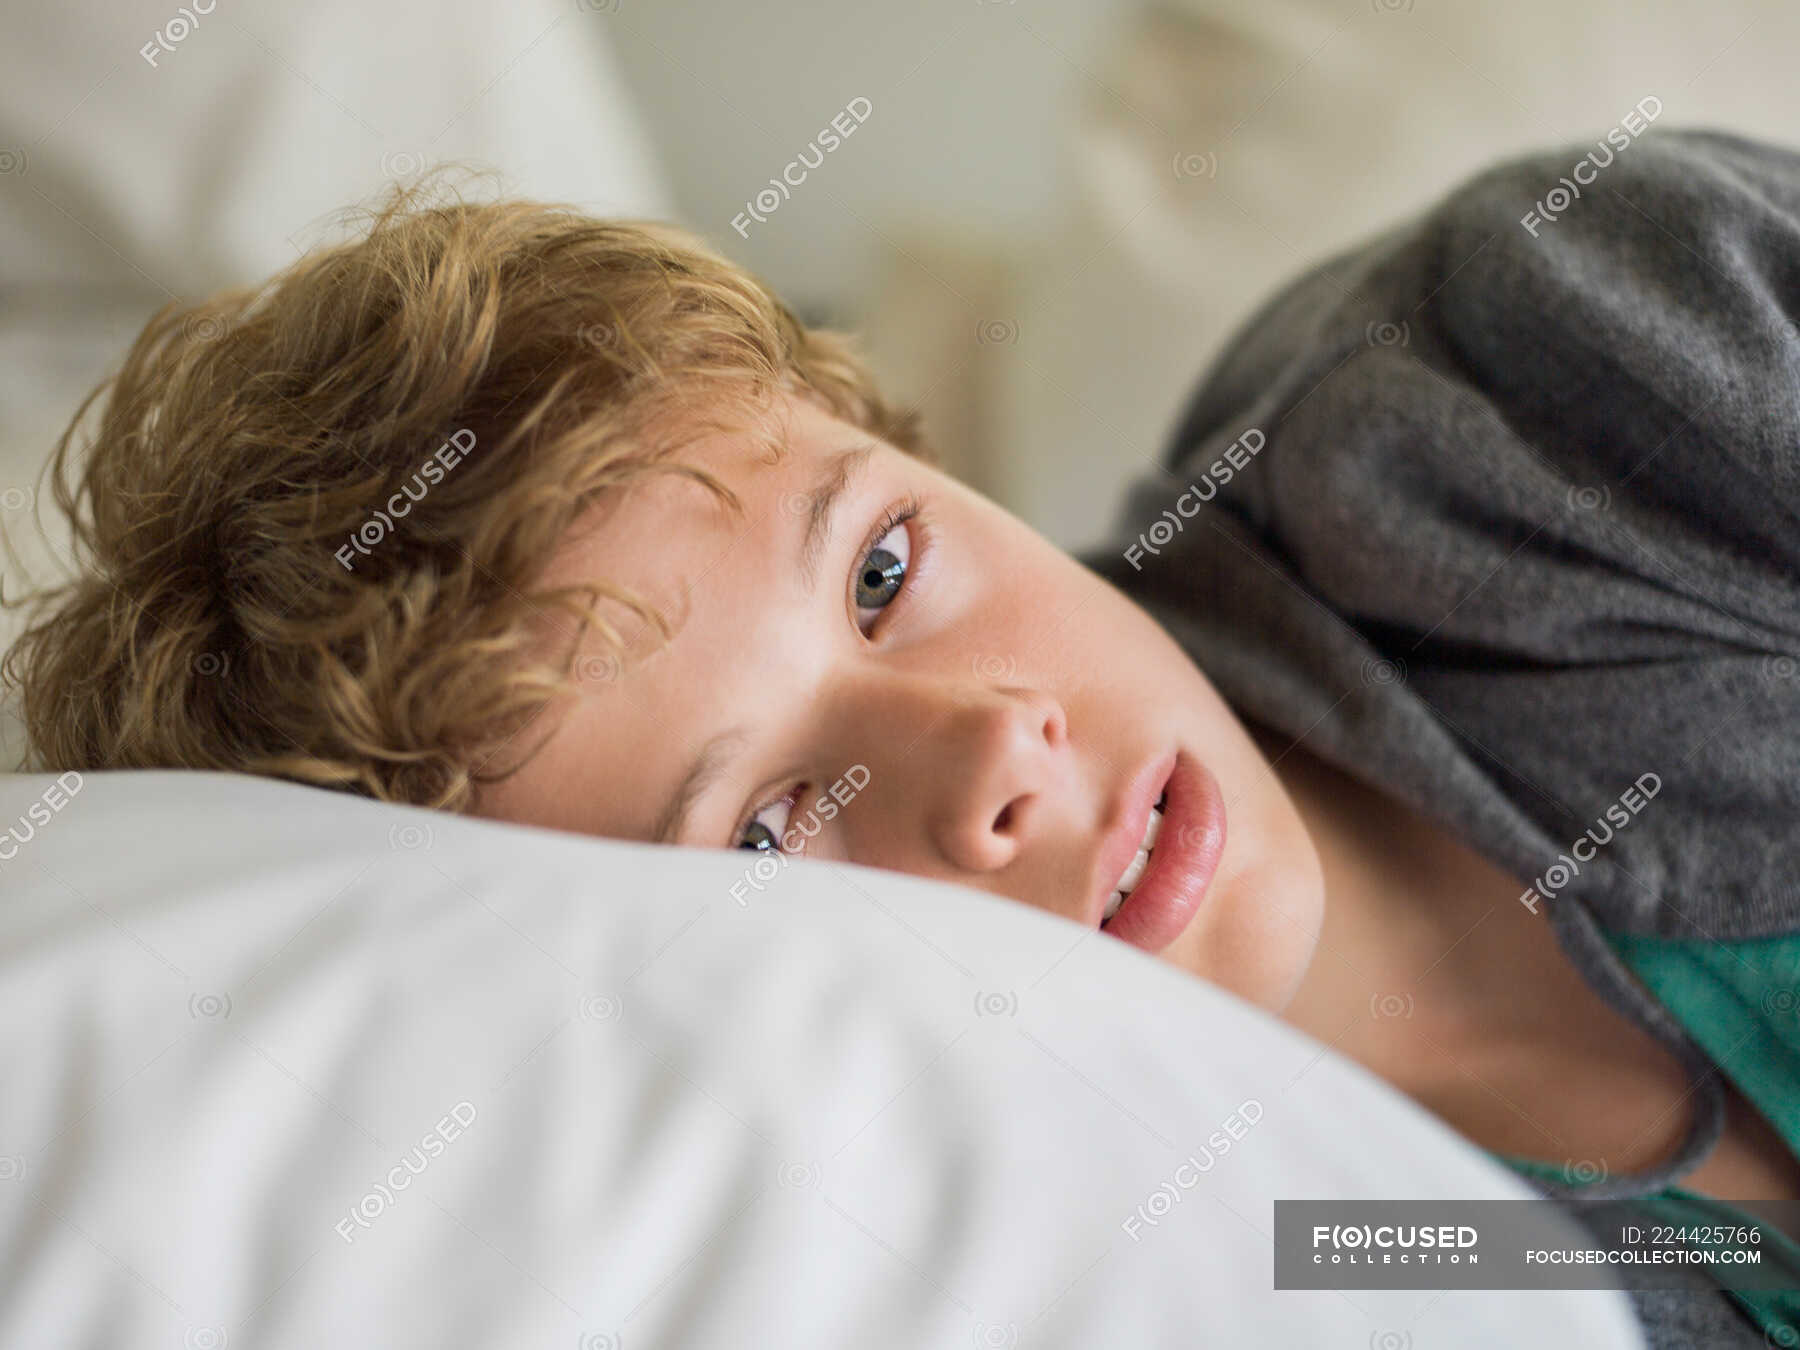 Девочка подросток на кровати голая